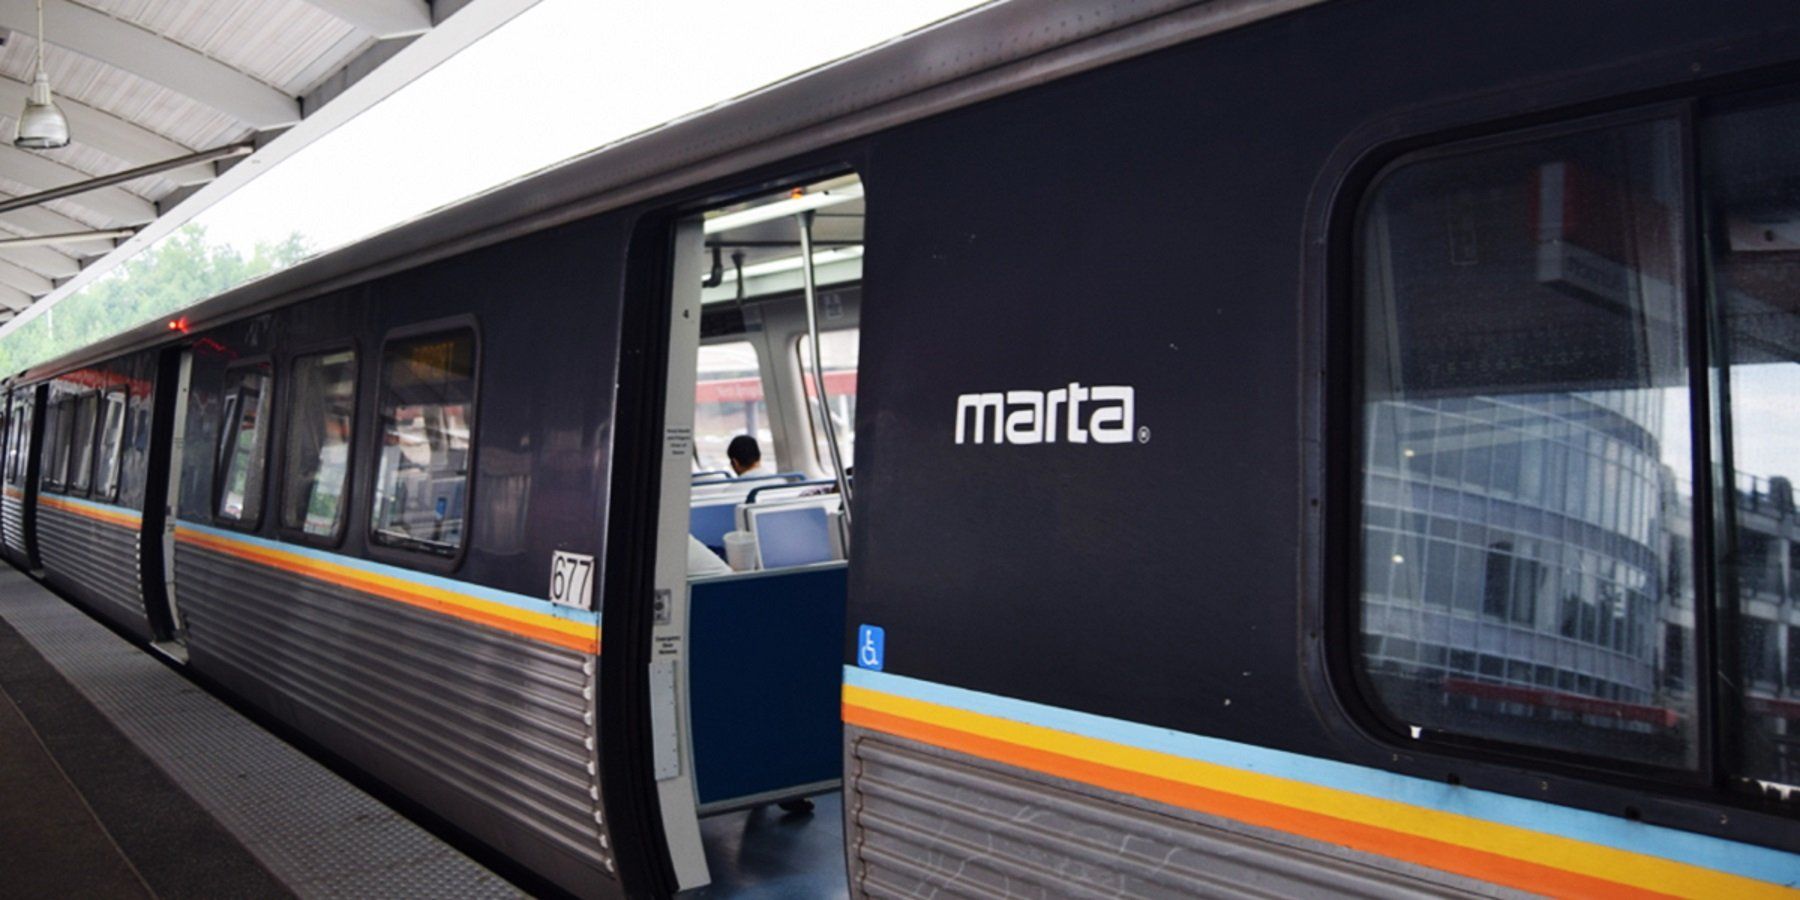 Marta Train